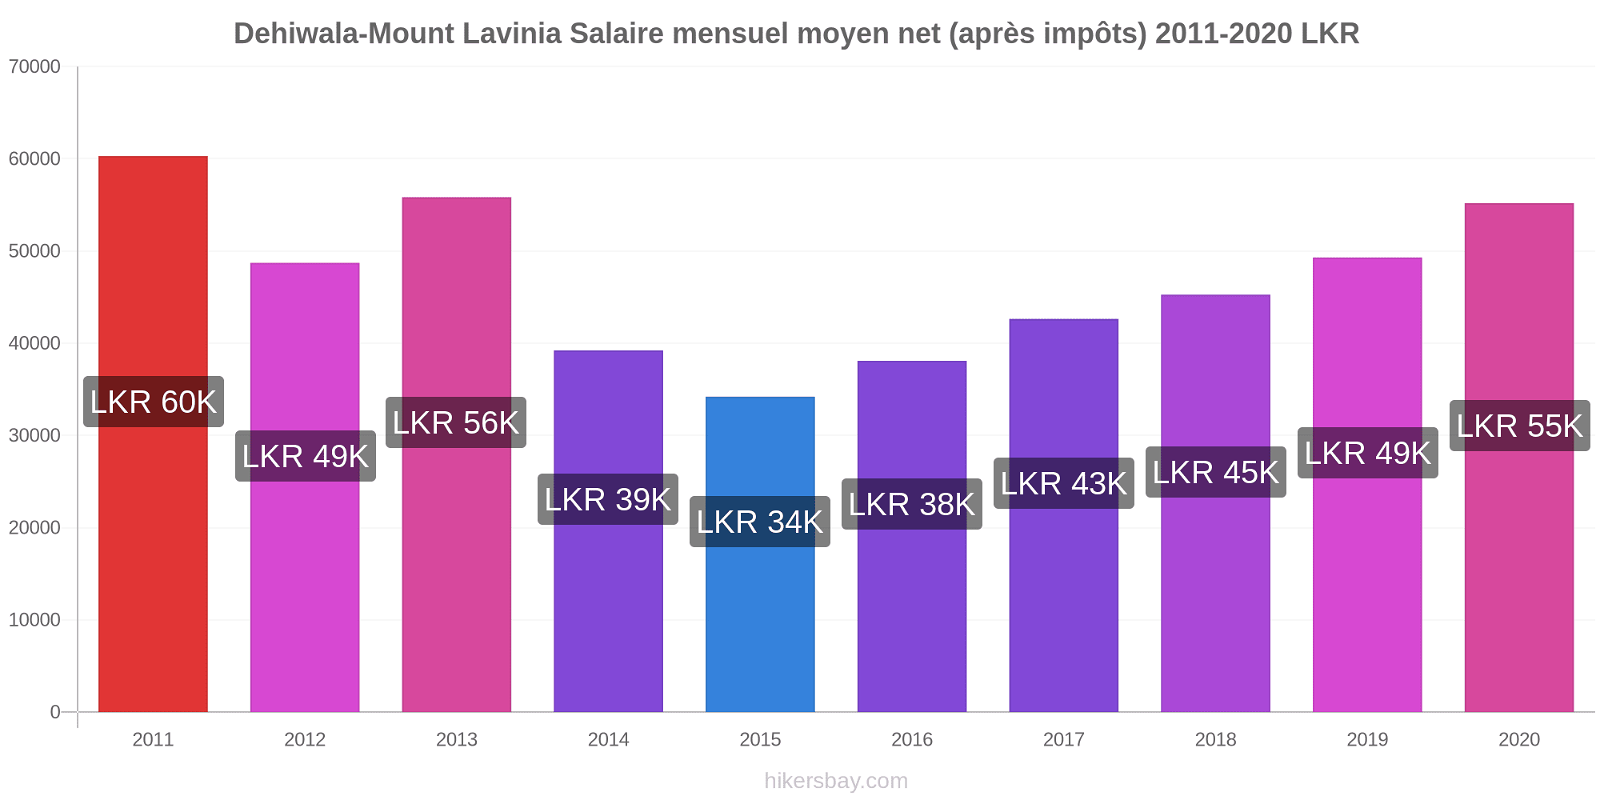 Dehiwala-Mount Lavinia changements de prix Salaire mensuel Net (après impôts) hikersbay.com